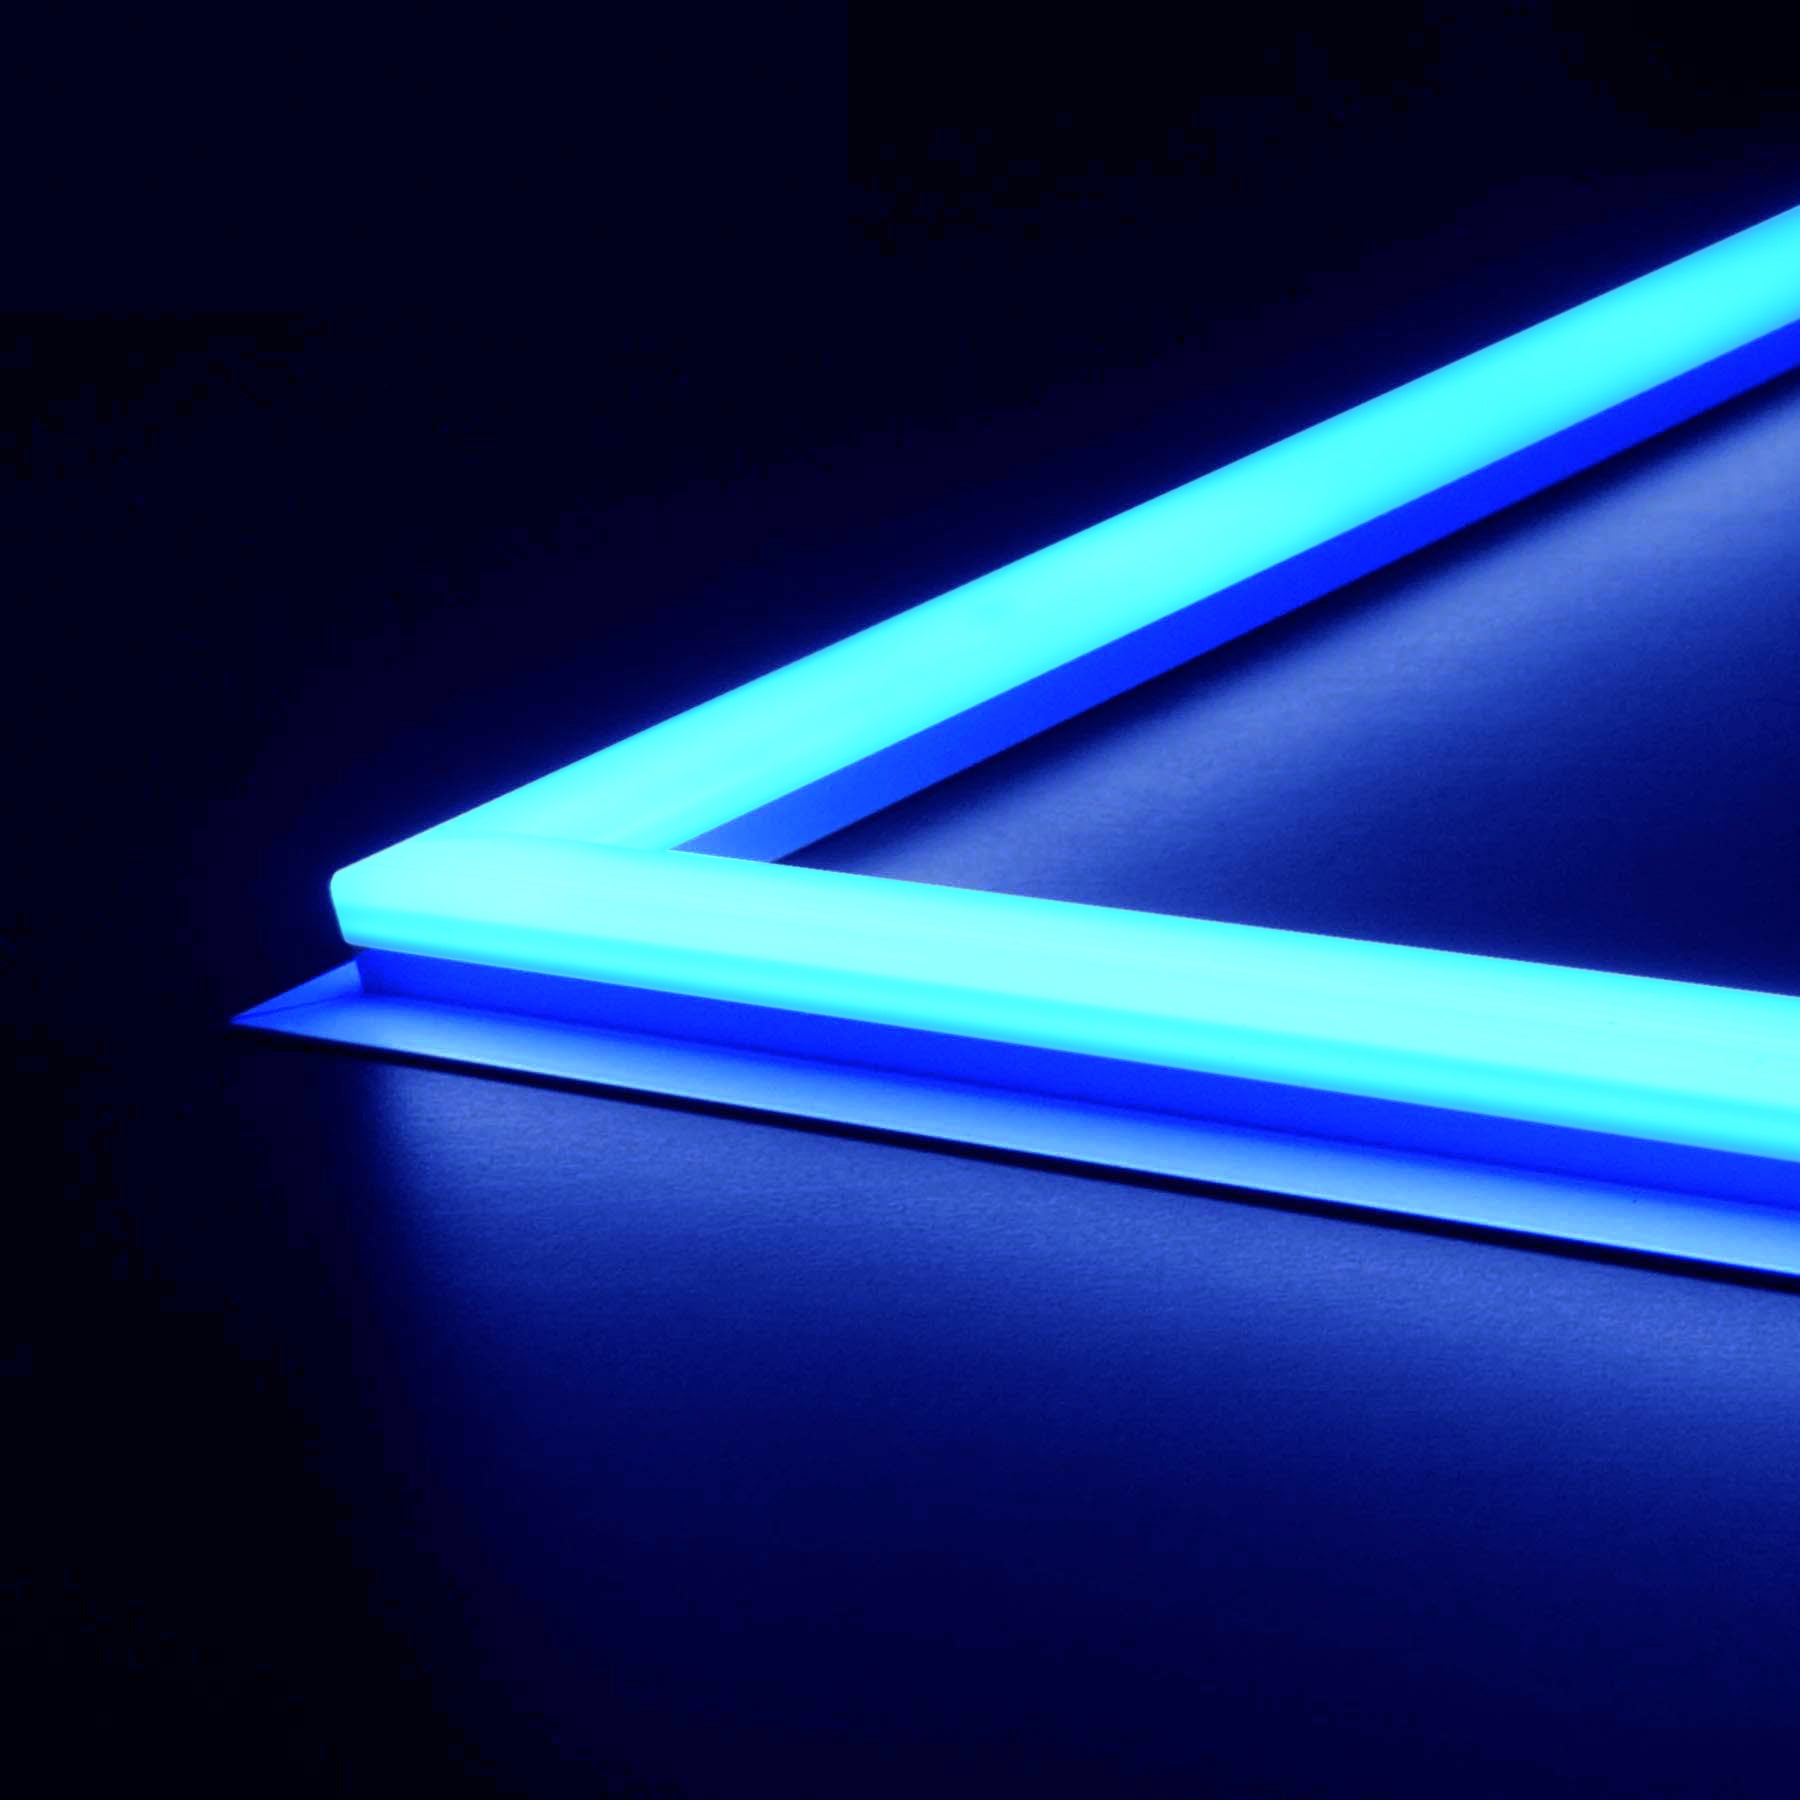 G.W.S LED Wholesale 595x595mm LED Panel Lights Blue / No 595x595mm 42W LED Panel Frame Border Edge Light